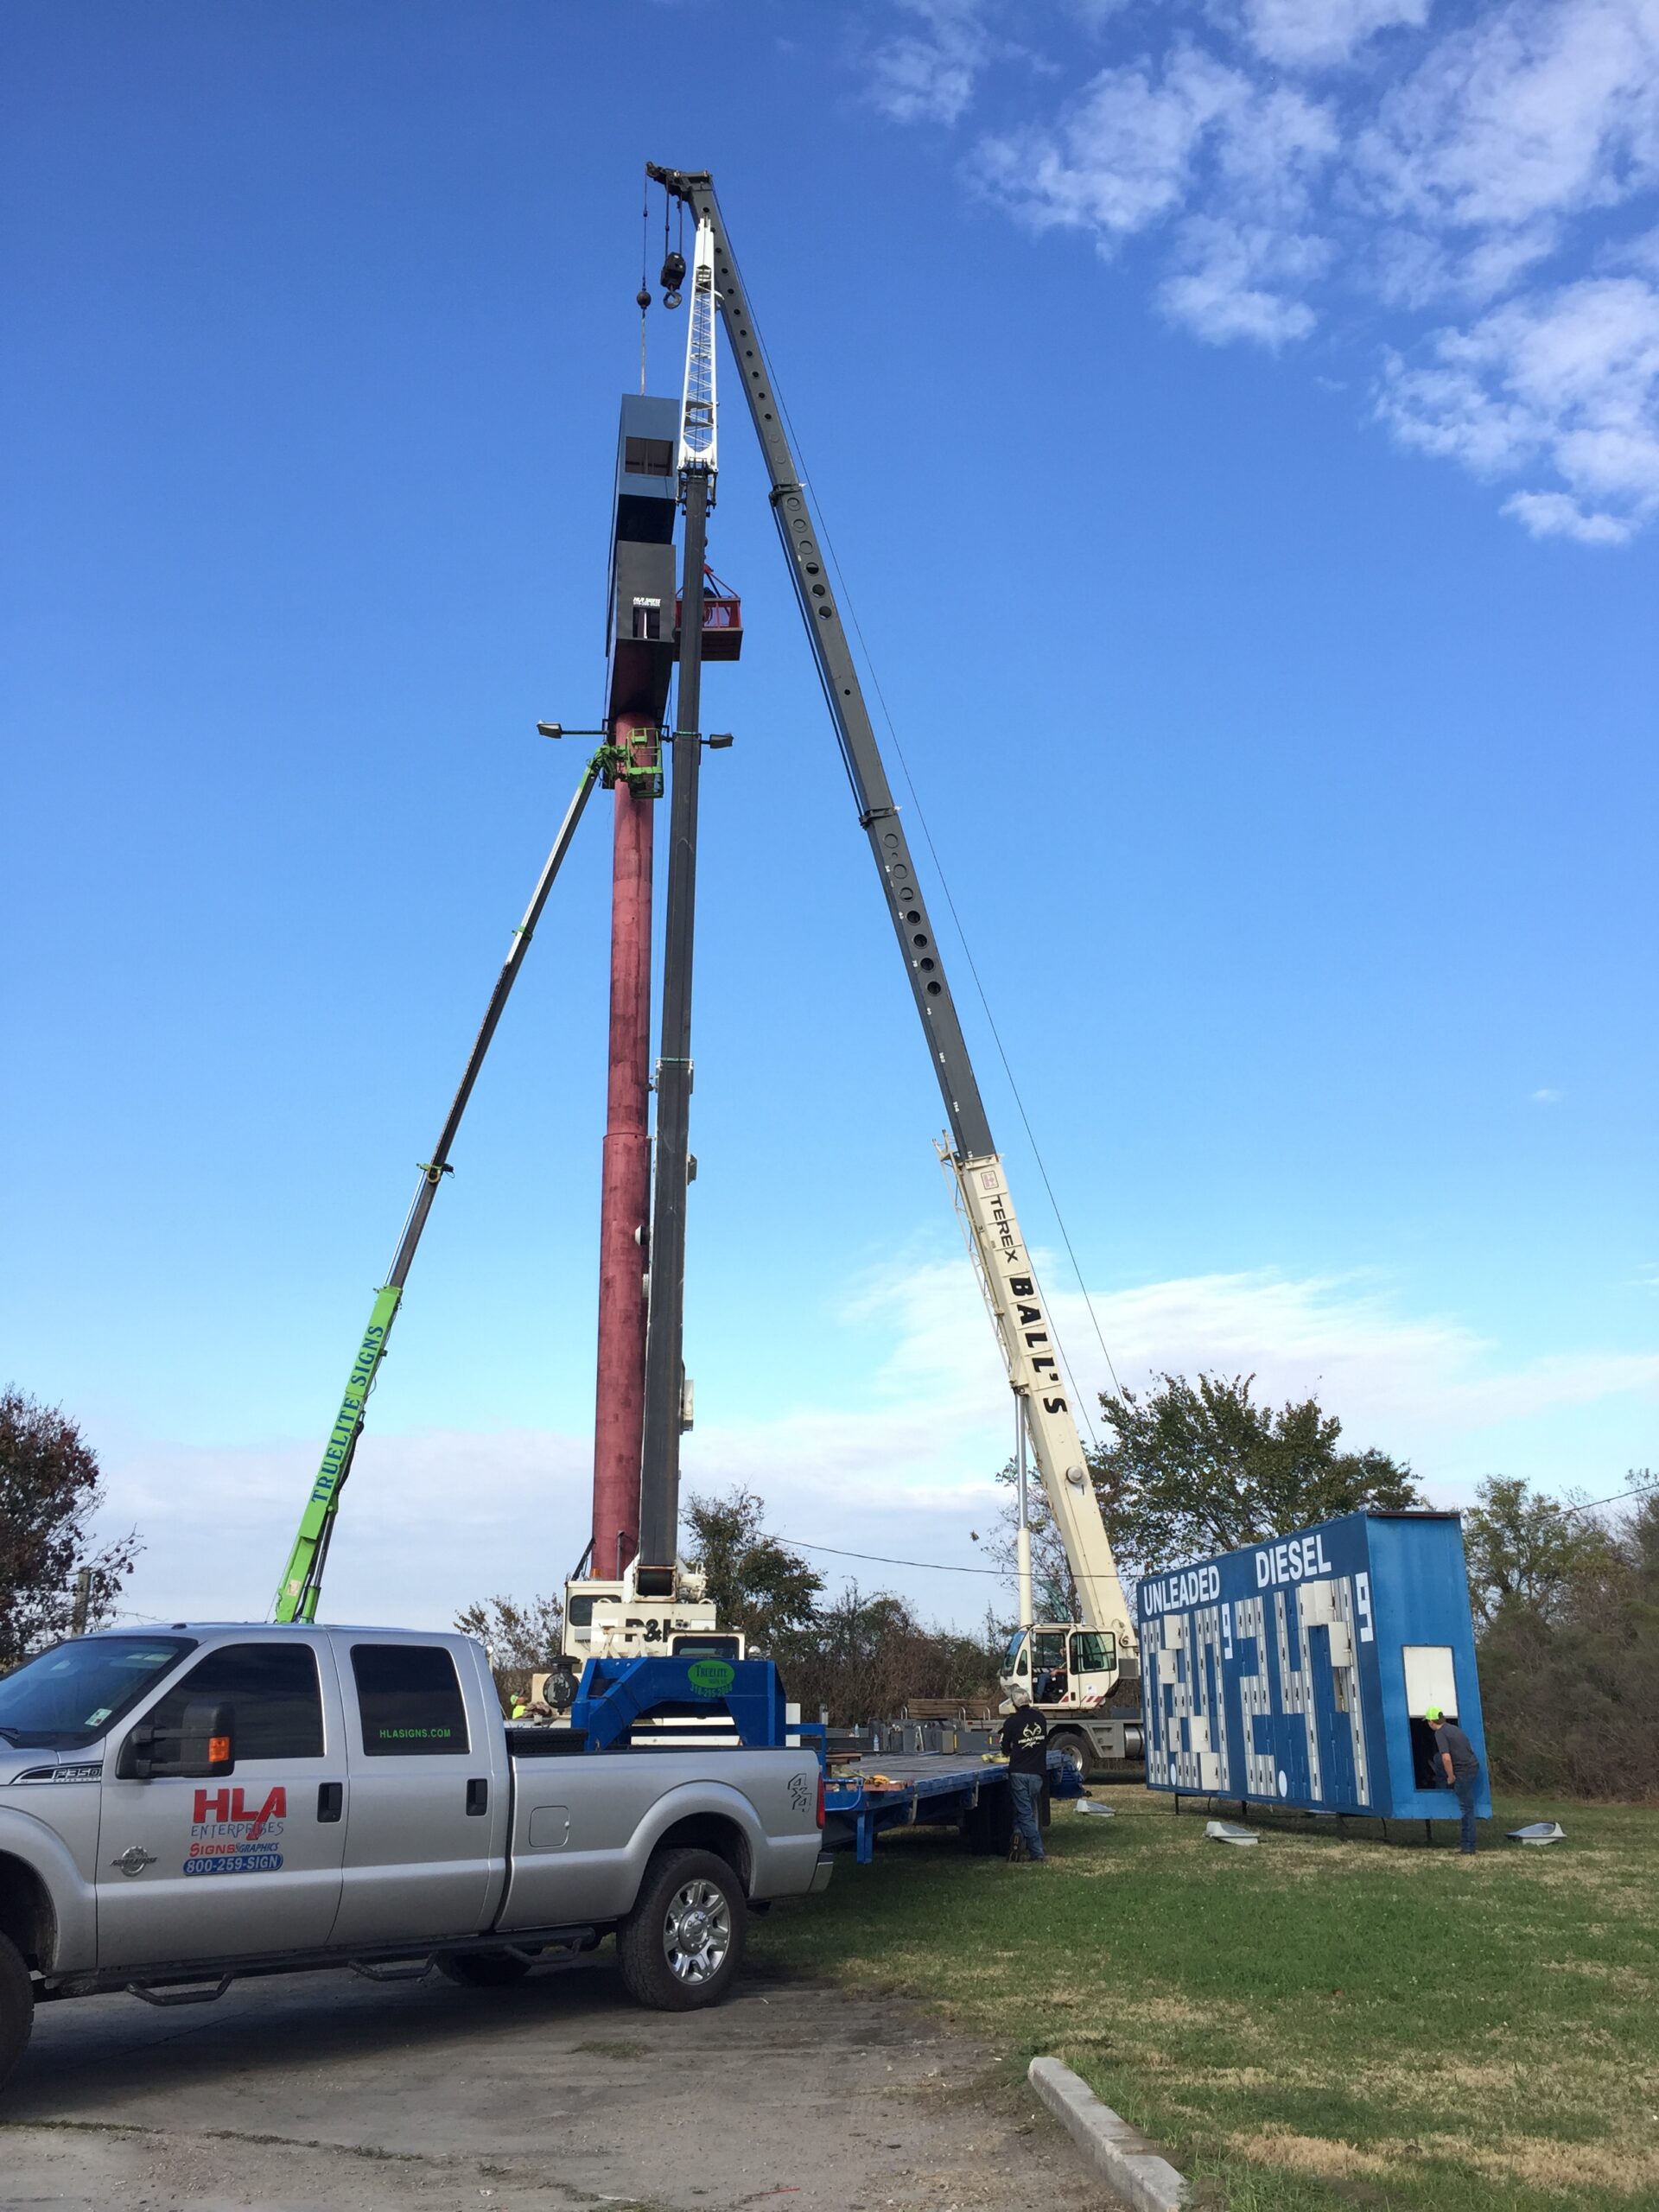 Cheveron Truck Stop High Rise Pylon Fuel Price Sign IH-20 Louisiana HLA Signs